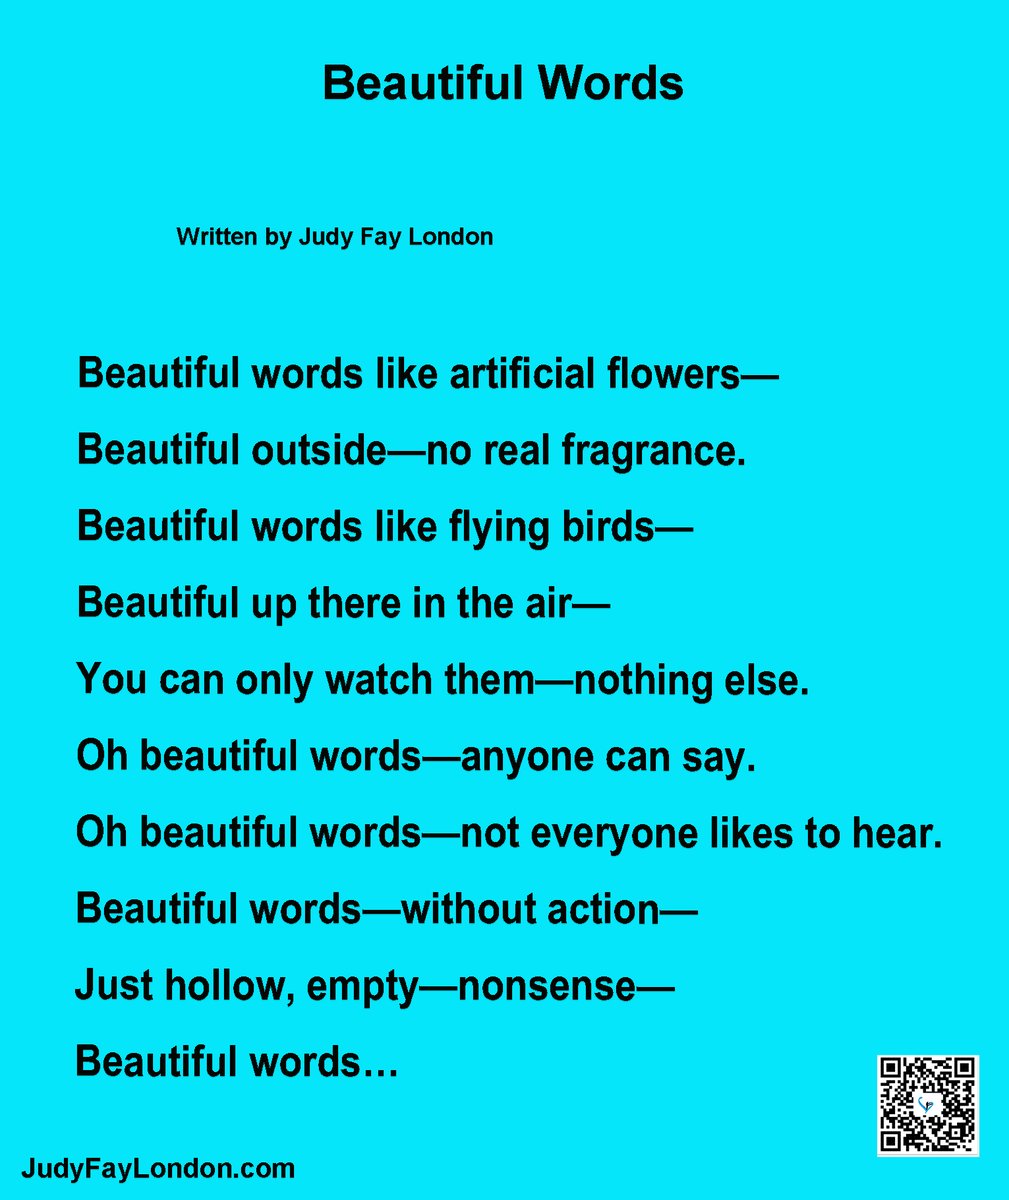 #poem #PoemADay #poet #poetry #beautifulwords #Website #freebooks #Writer #author #DogLover #speaker #motivationalspeaker 
judyfaylondon.com/2022/11/04/bea…